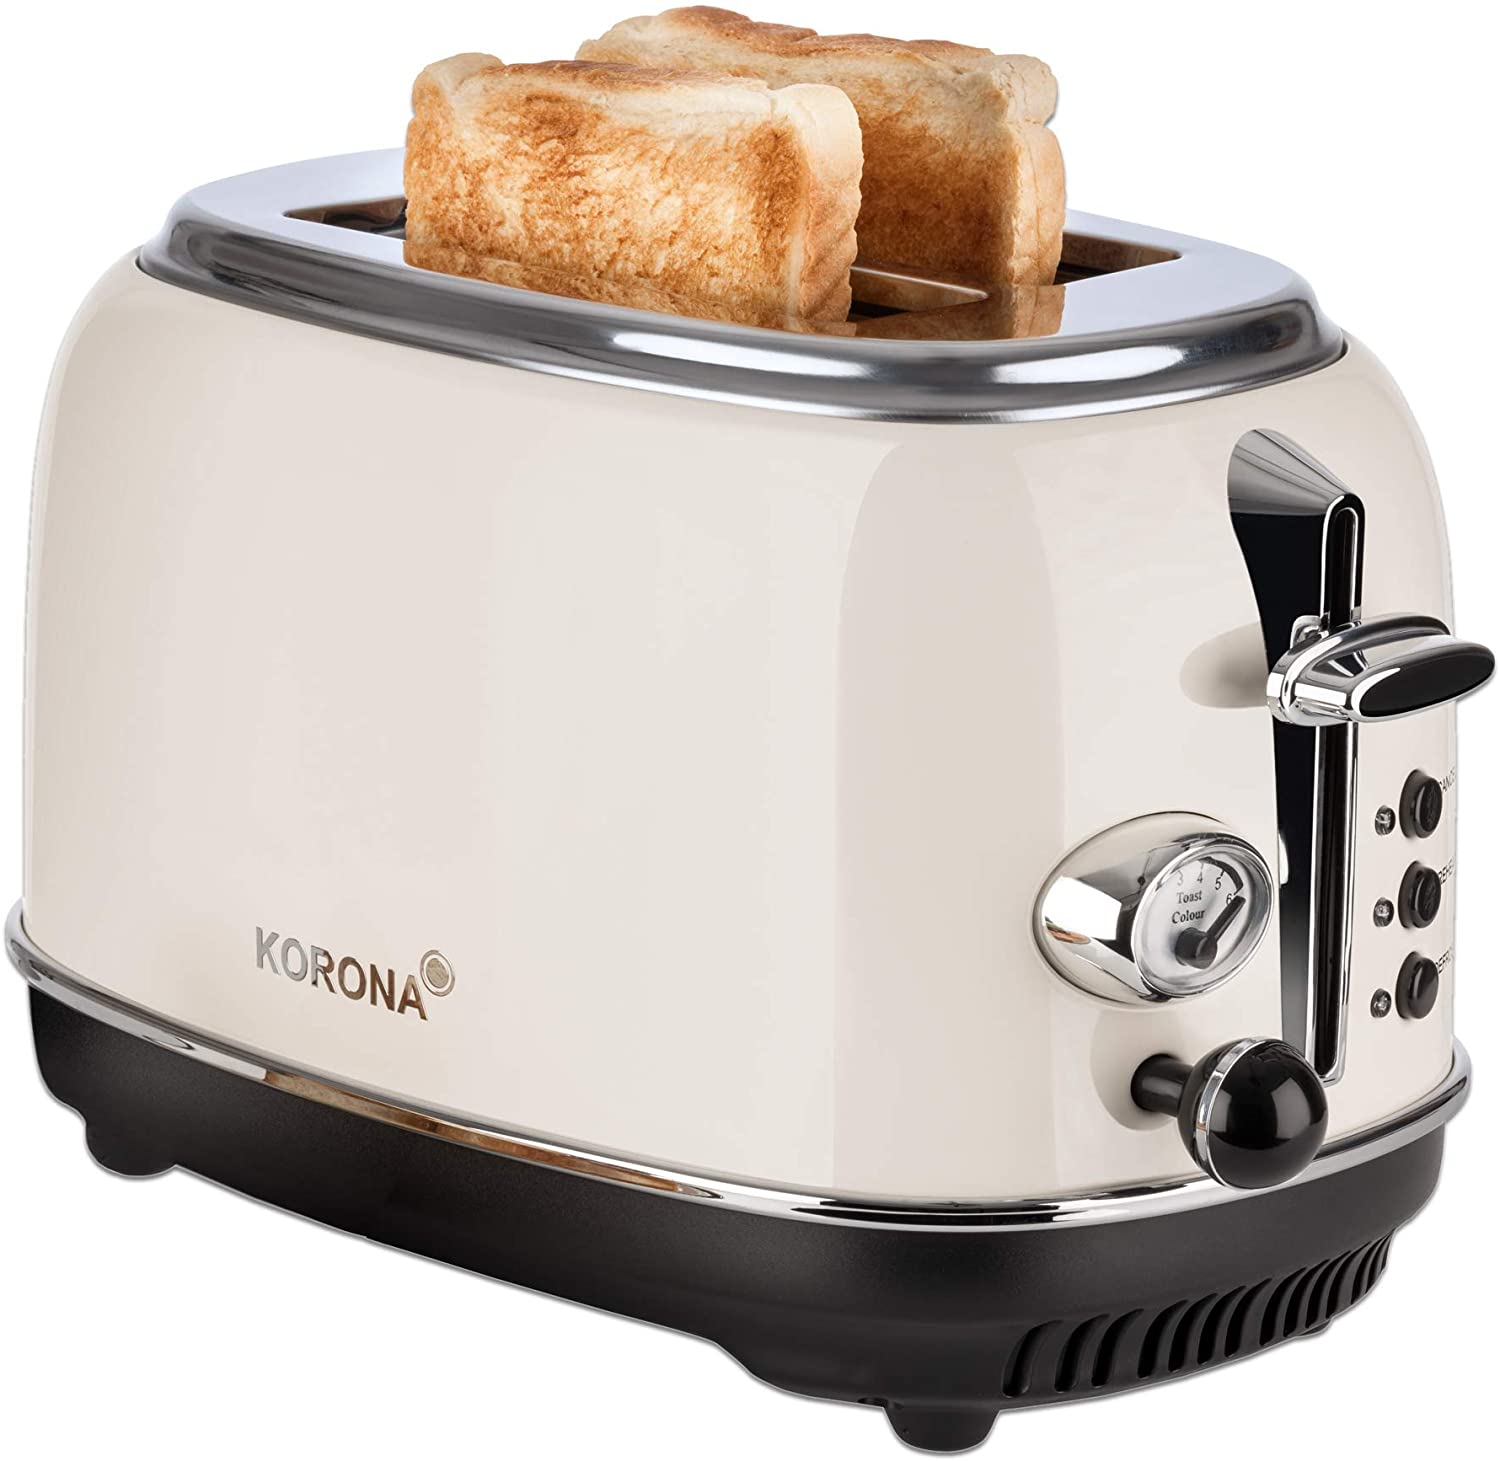 Korona 21666 Toaster, 2 Slices, Cream, Roasting Degree Display, Defrosting, Roasting, Warming, 810 Watts, Bun Attachment, Crumb Drawer, Bread Slices Centreing